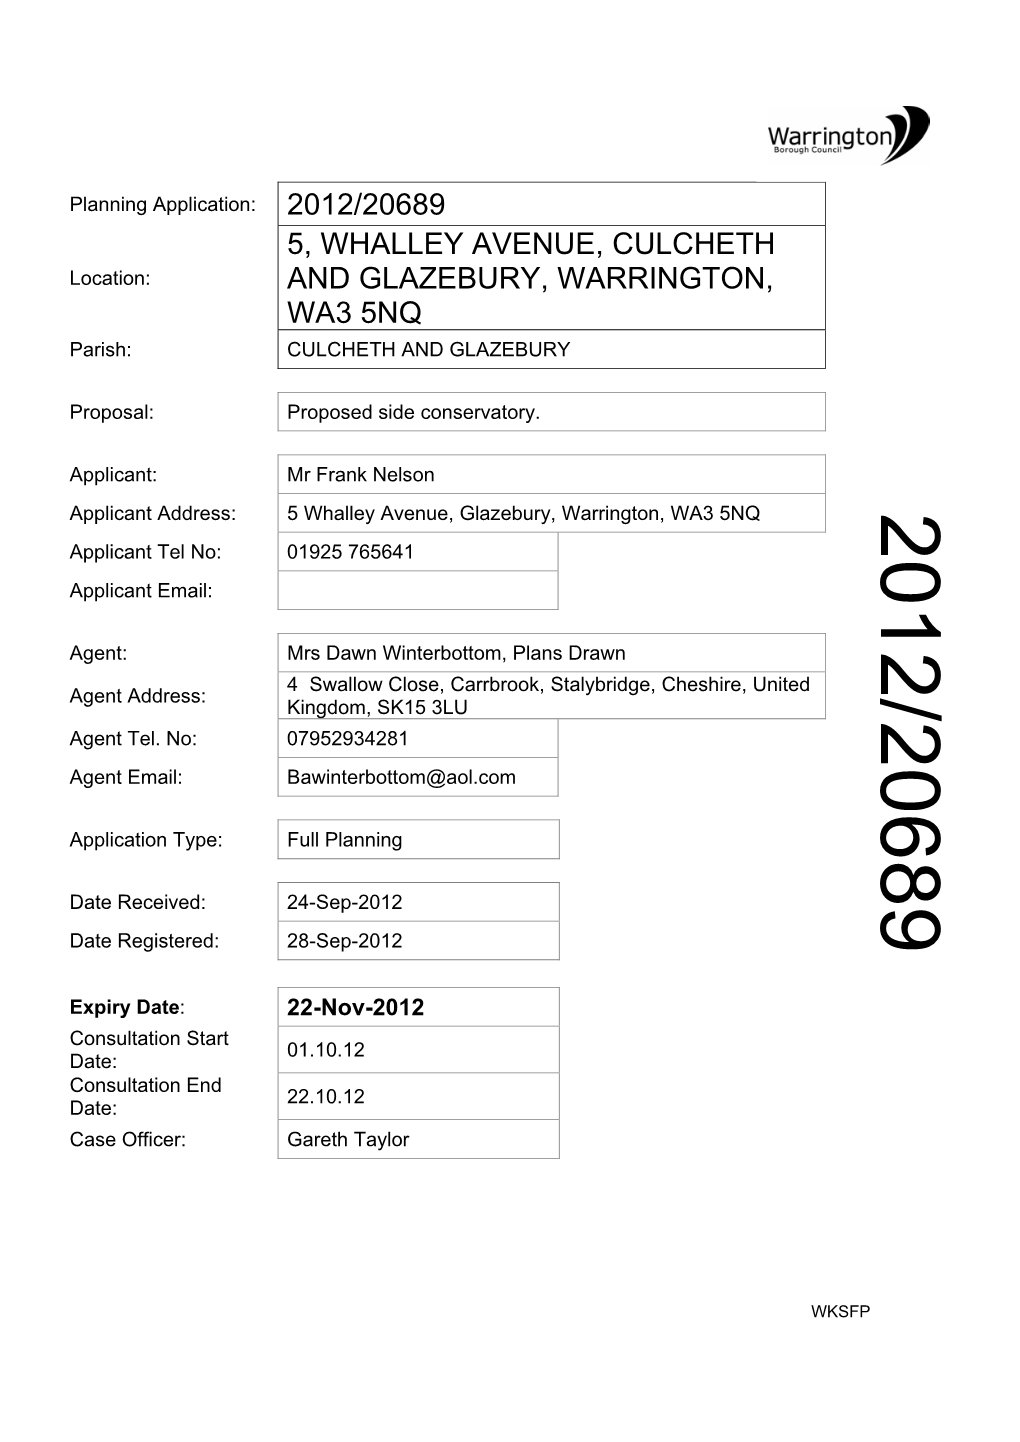 2012/20689 5, Whalley Avenue, Culcheth and Glazebury, Warrington, Wa3